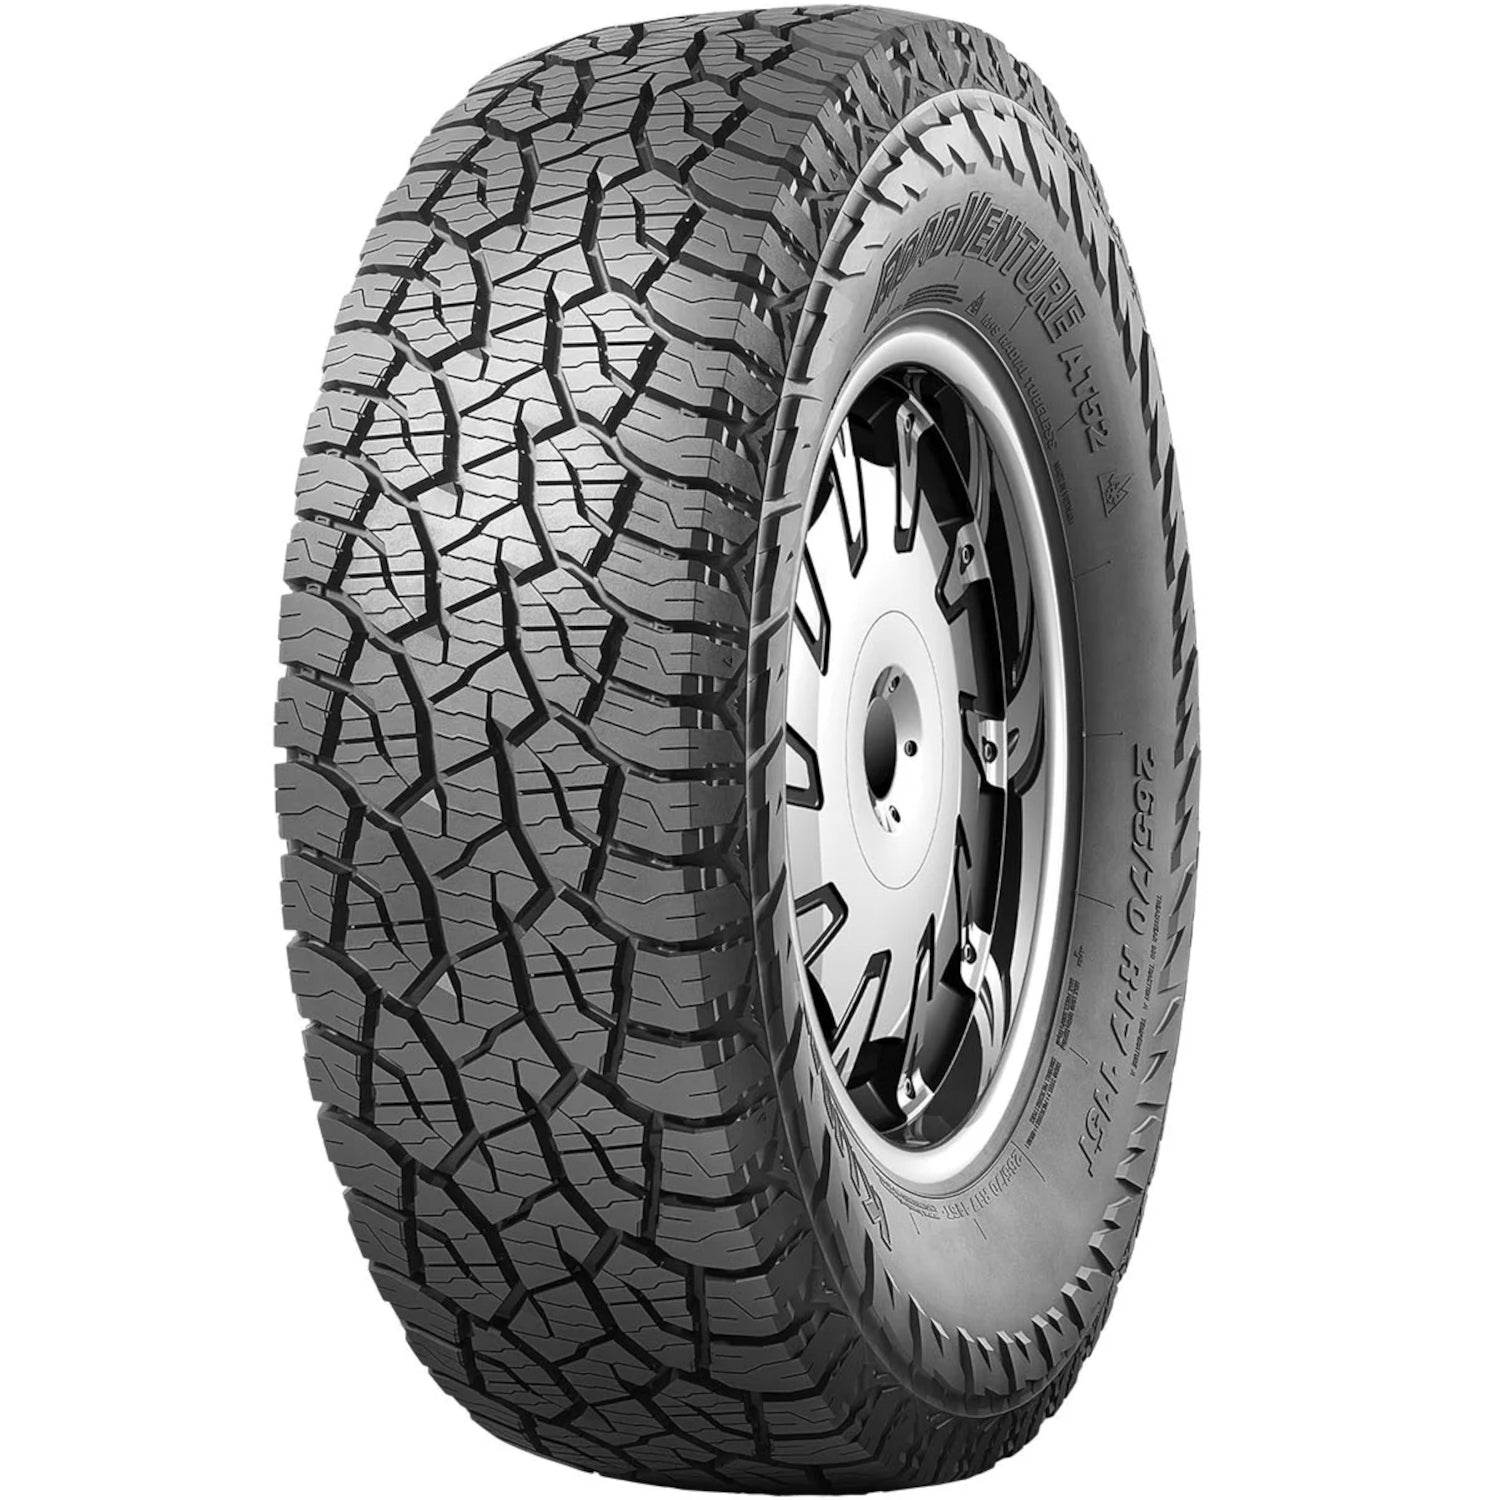 KUMHO ROAD VENTURE AT52 LT305/55R20 (33.2X12R 20) Tires